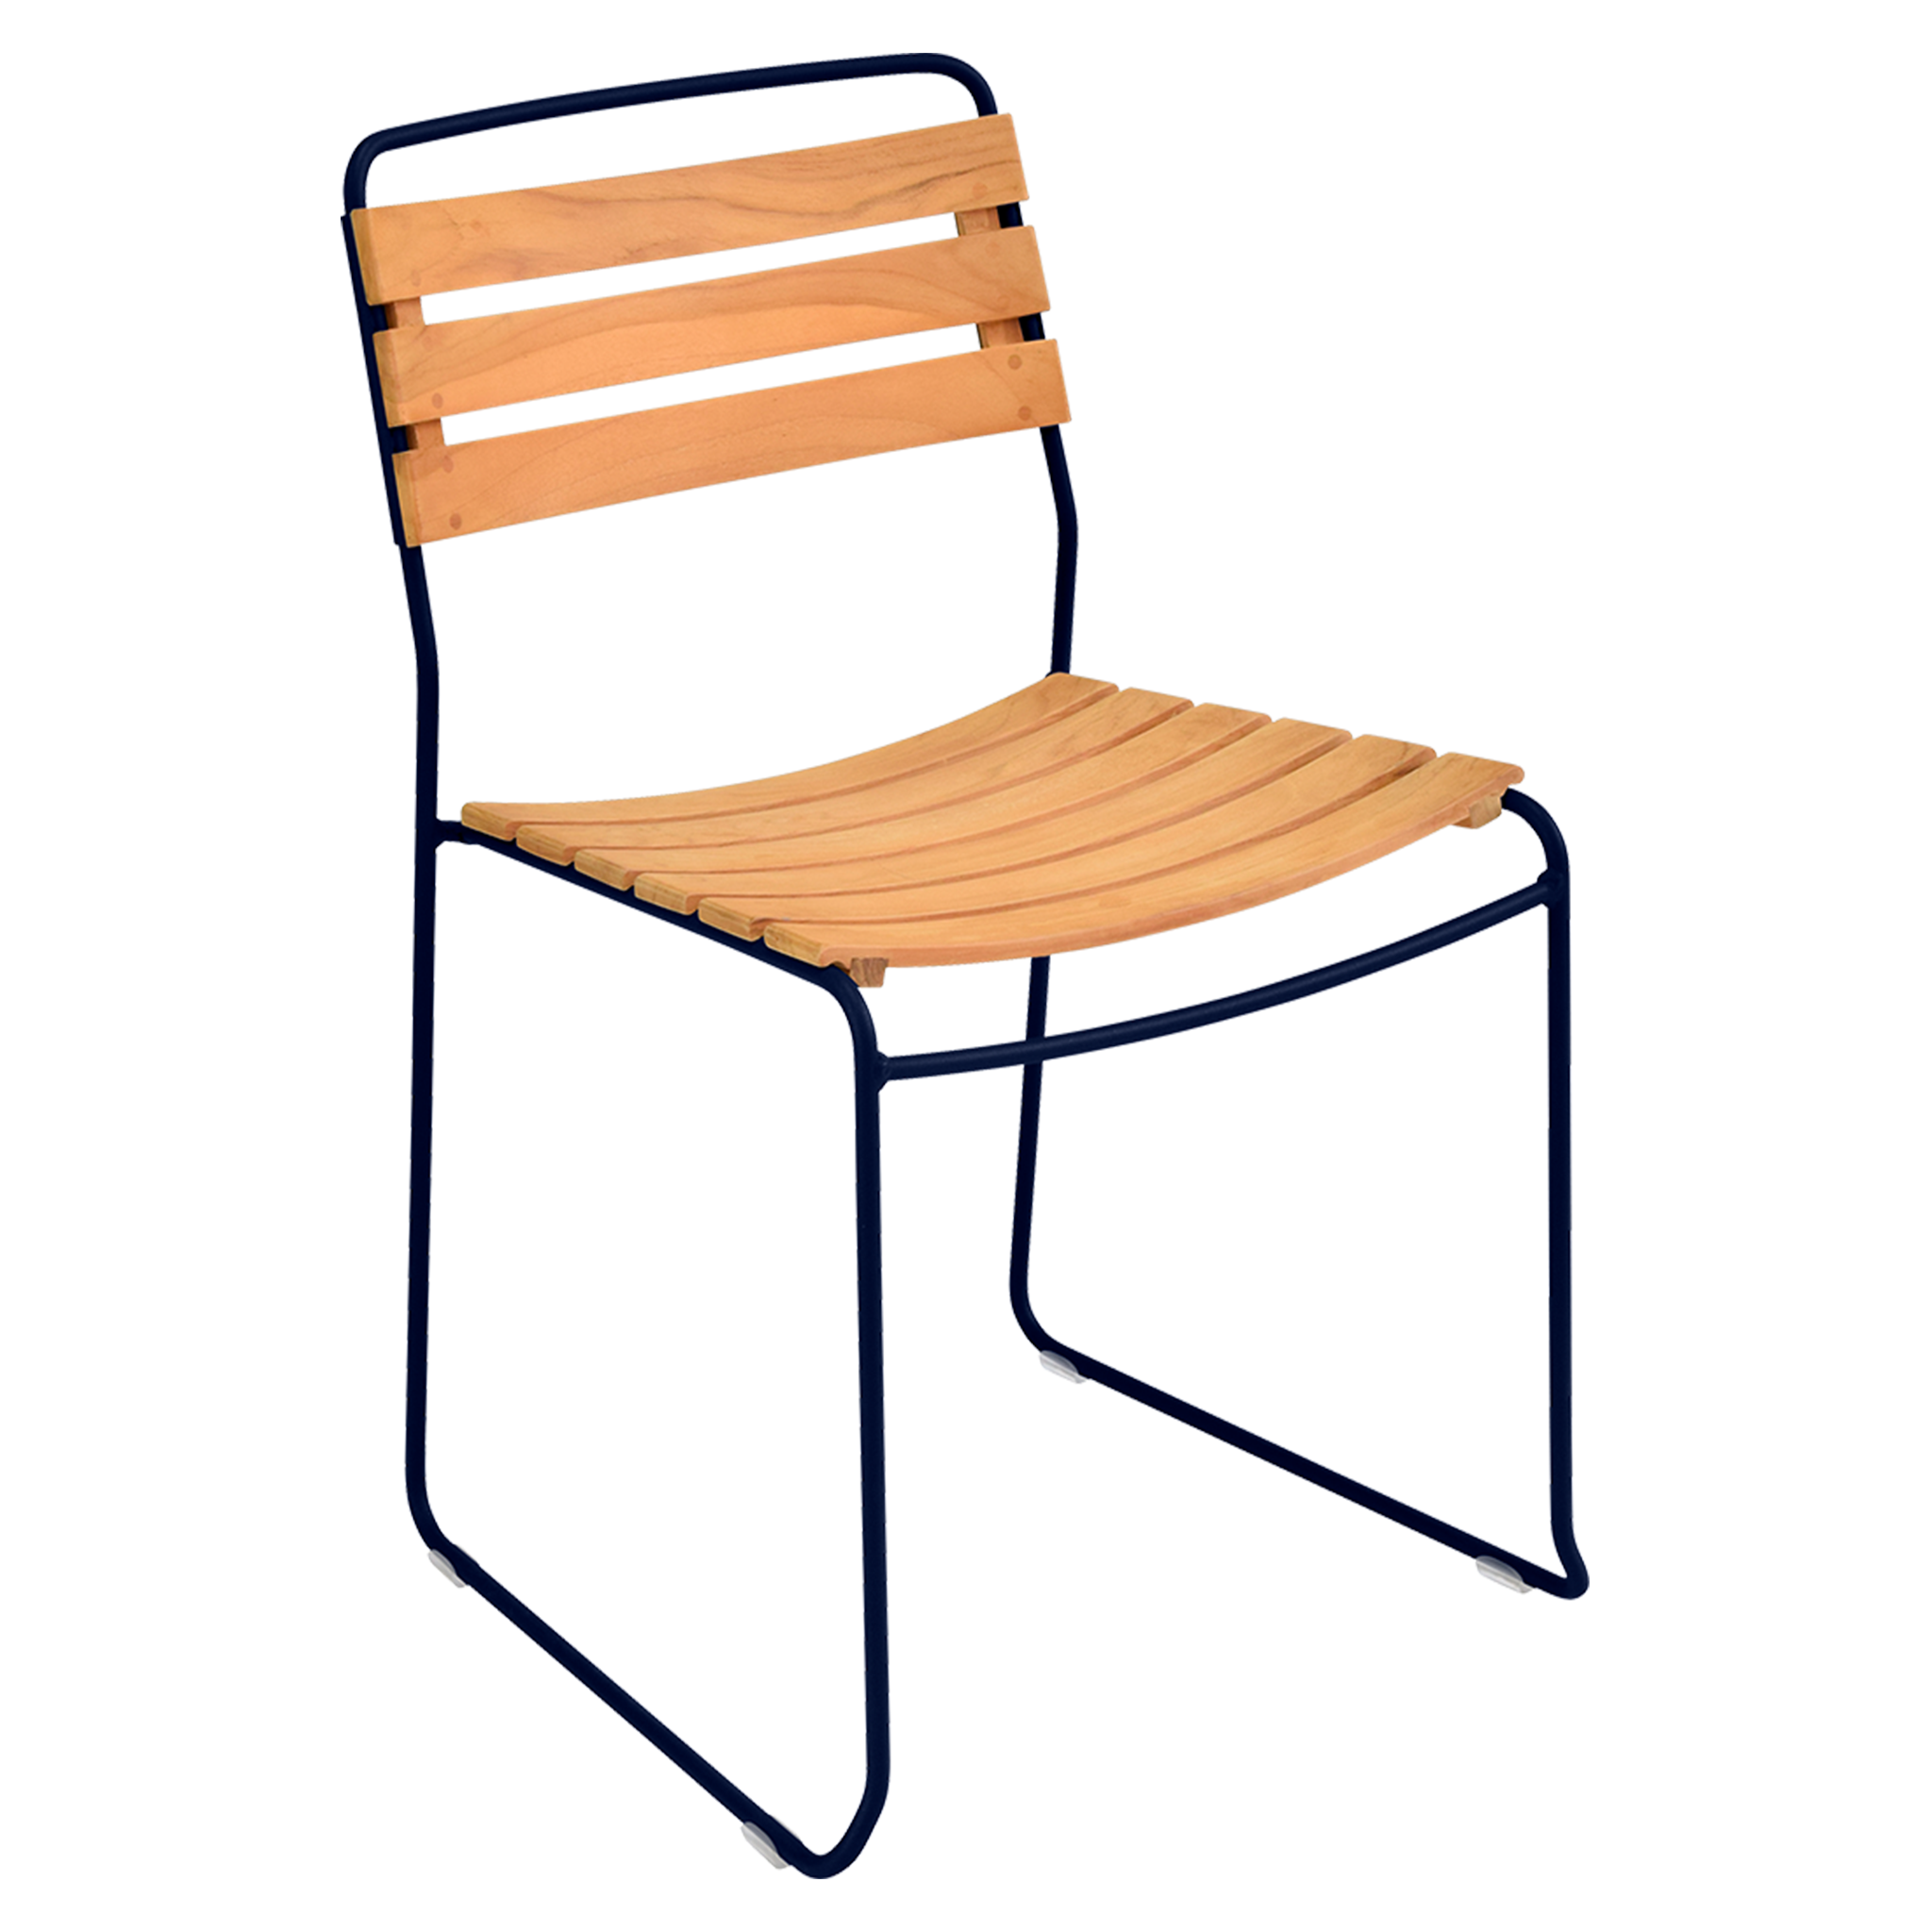 Surprising Teak Chair by Fermob